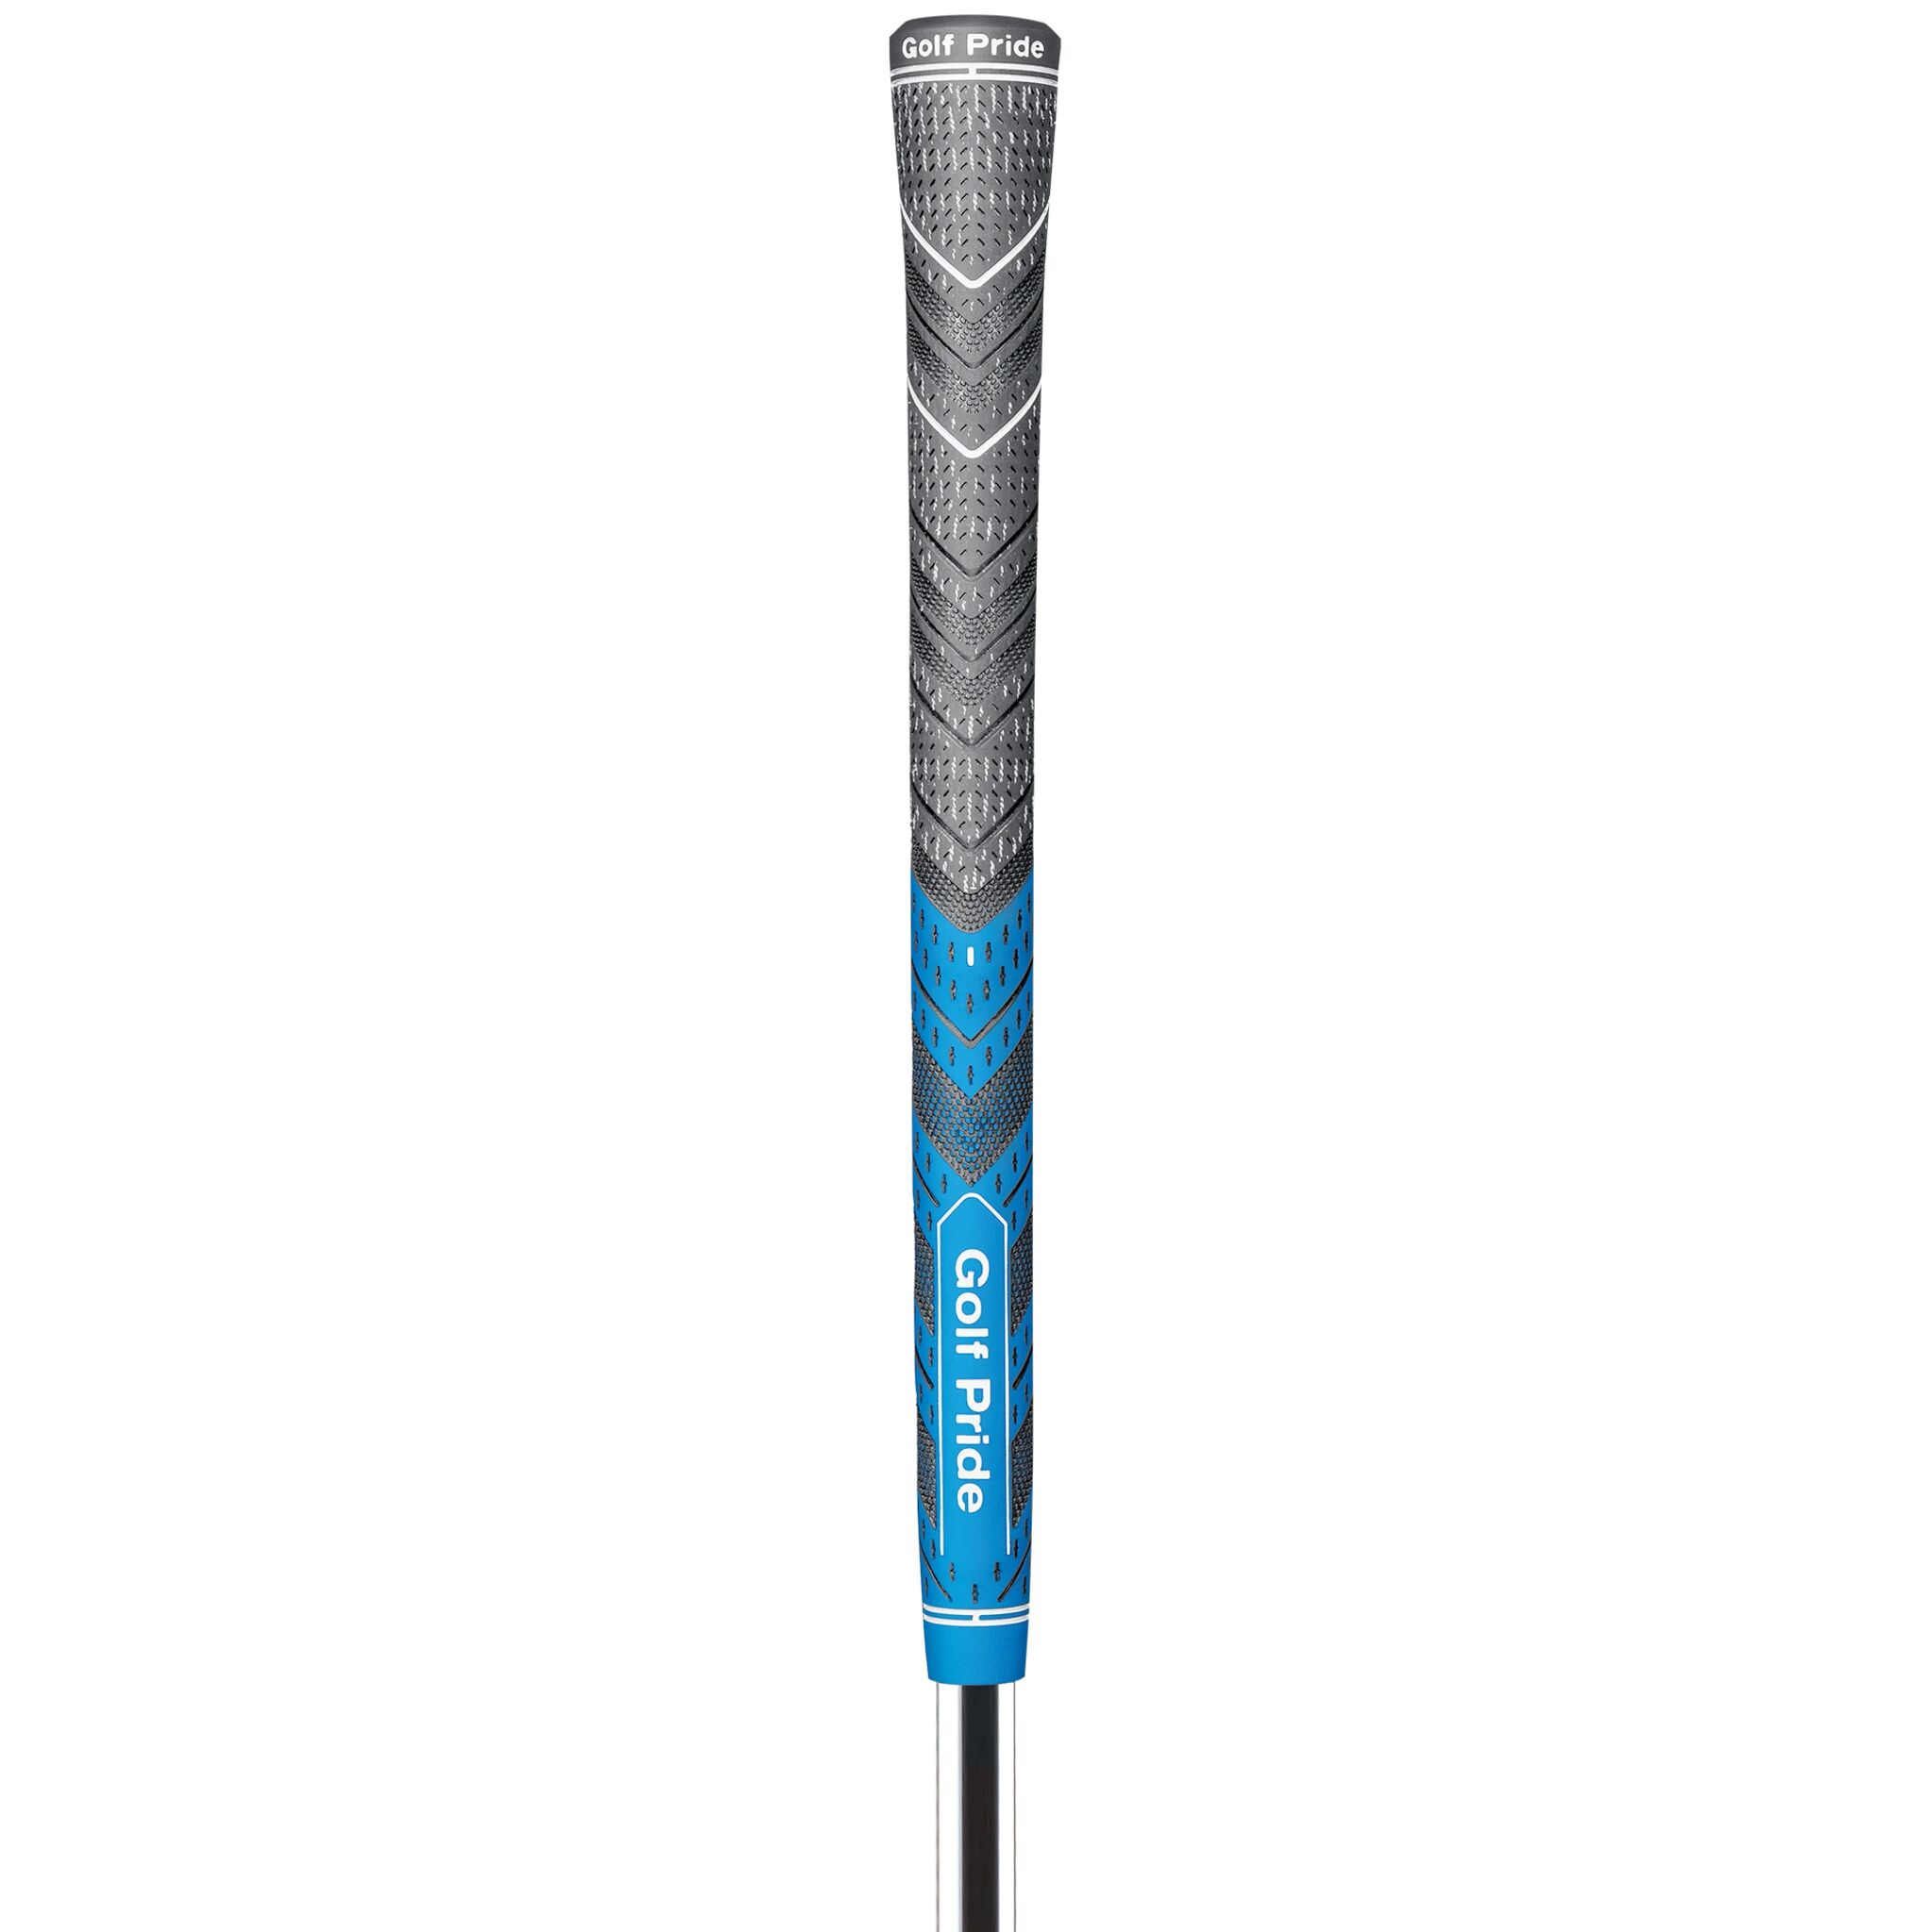 Golfpride Mcc Plus4, golfgrep STD Grey/Blue